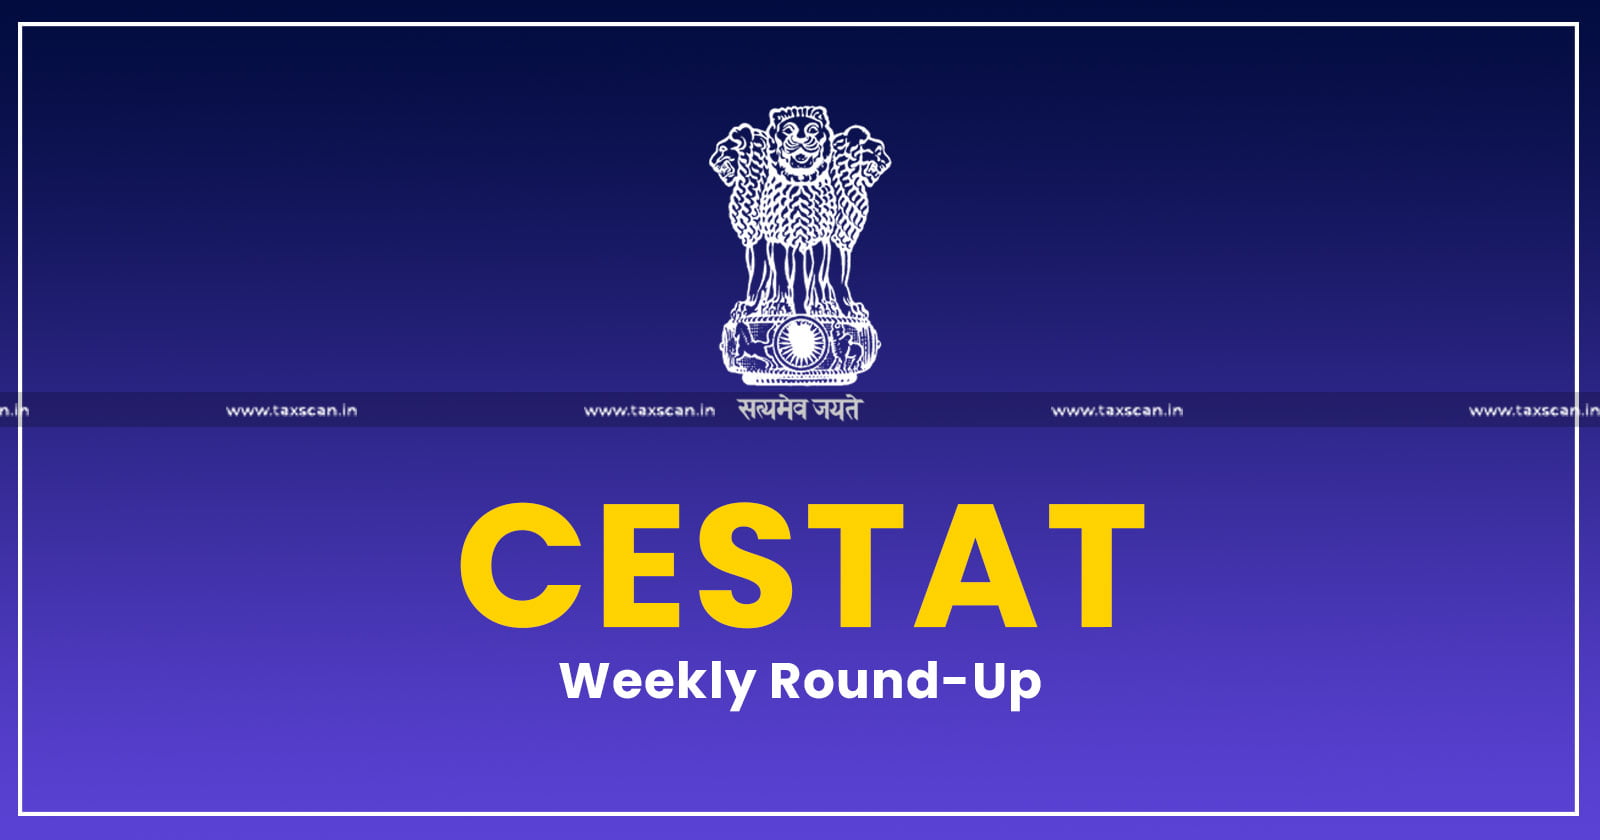 CESTAT Weekly Round-Up - CESTAT - Weekly Round-Up - Round-Up - Taxscan